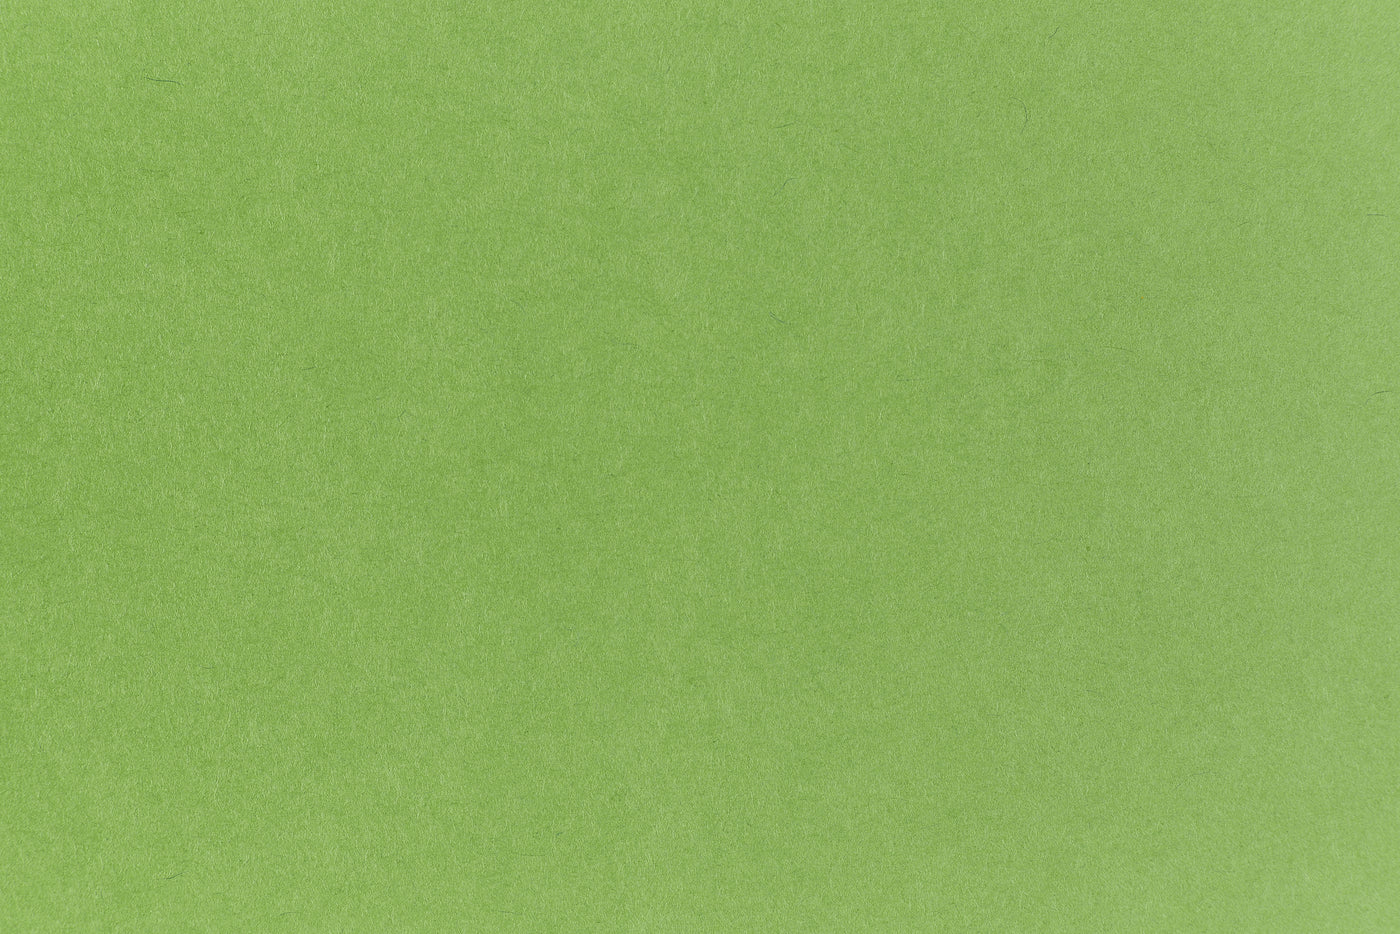 Gumdrop Green Envelope (Pop-Tone)